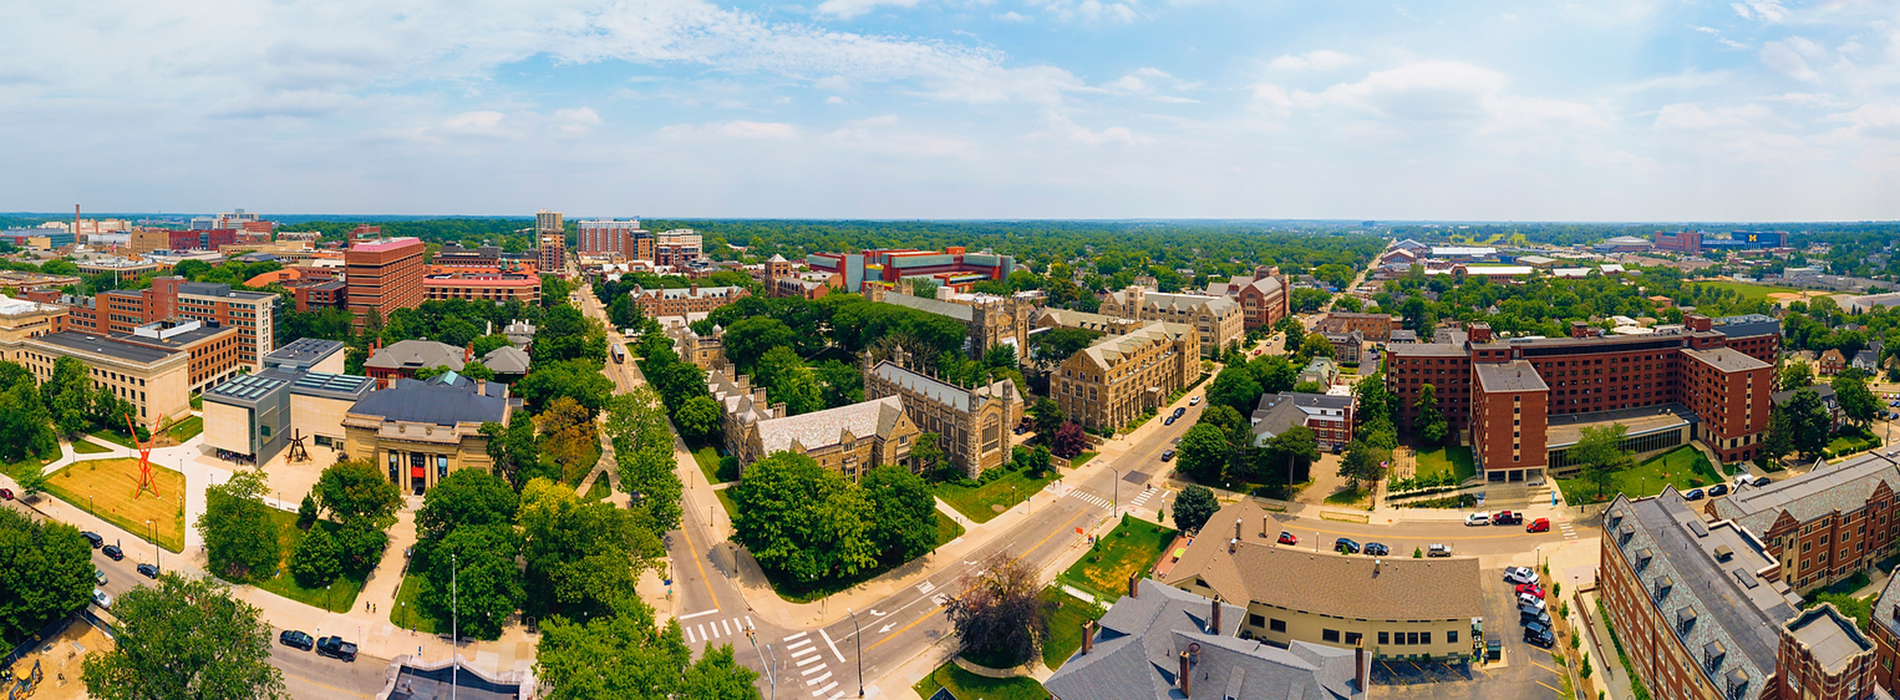 University of Michigan aerial view of buildings